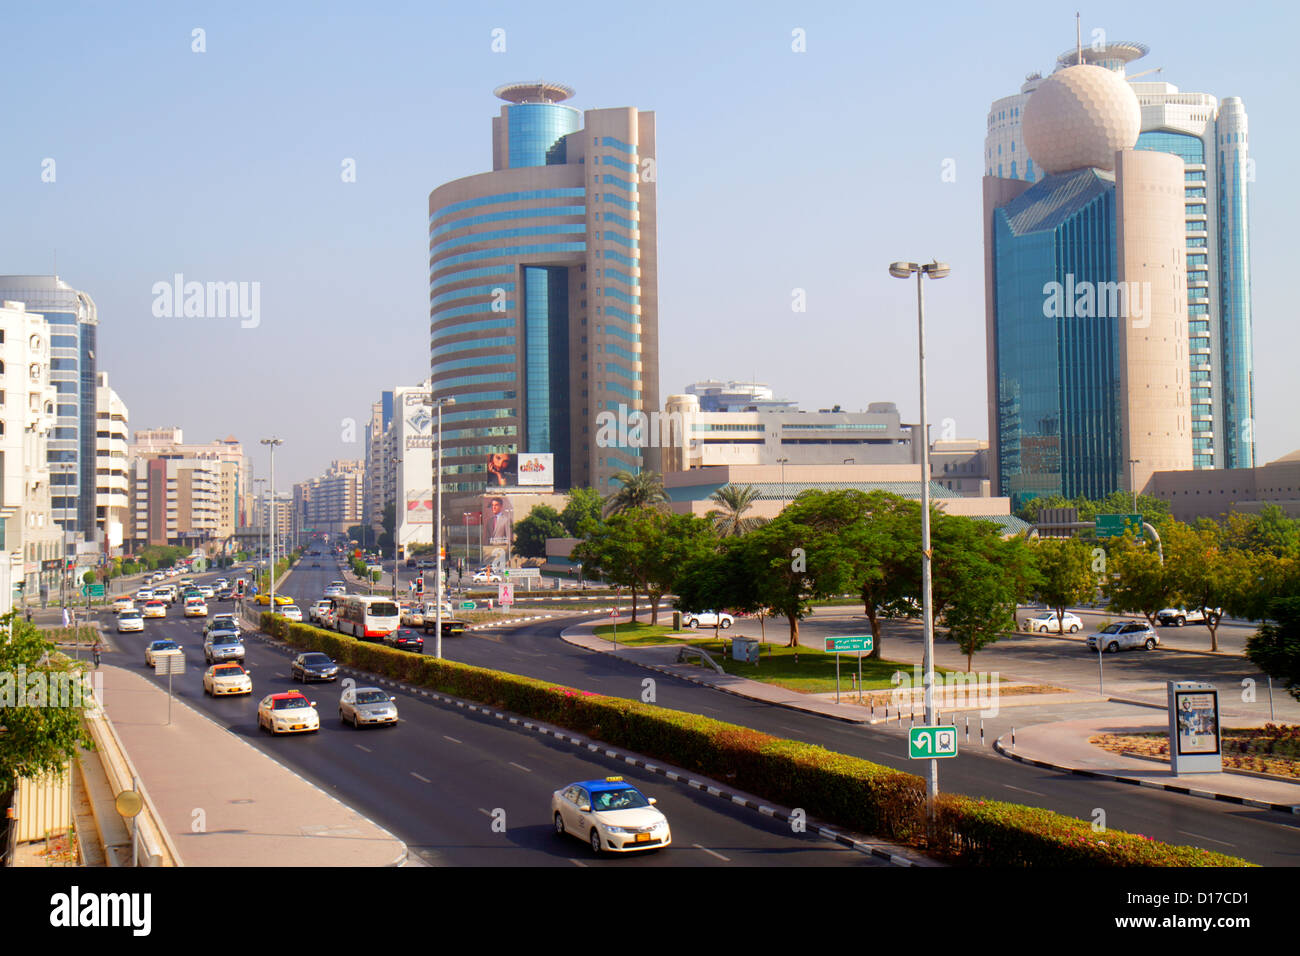 Dubai UAE,United Arab Emirates,Deira,Al Maktoum Road,traffic,taxi,taxis,cab,cabs,Dubai Creek Tower,Al Reem Tower,Etisalat Tower I,UAE121012036 Stock Photo